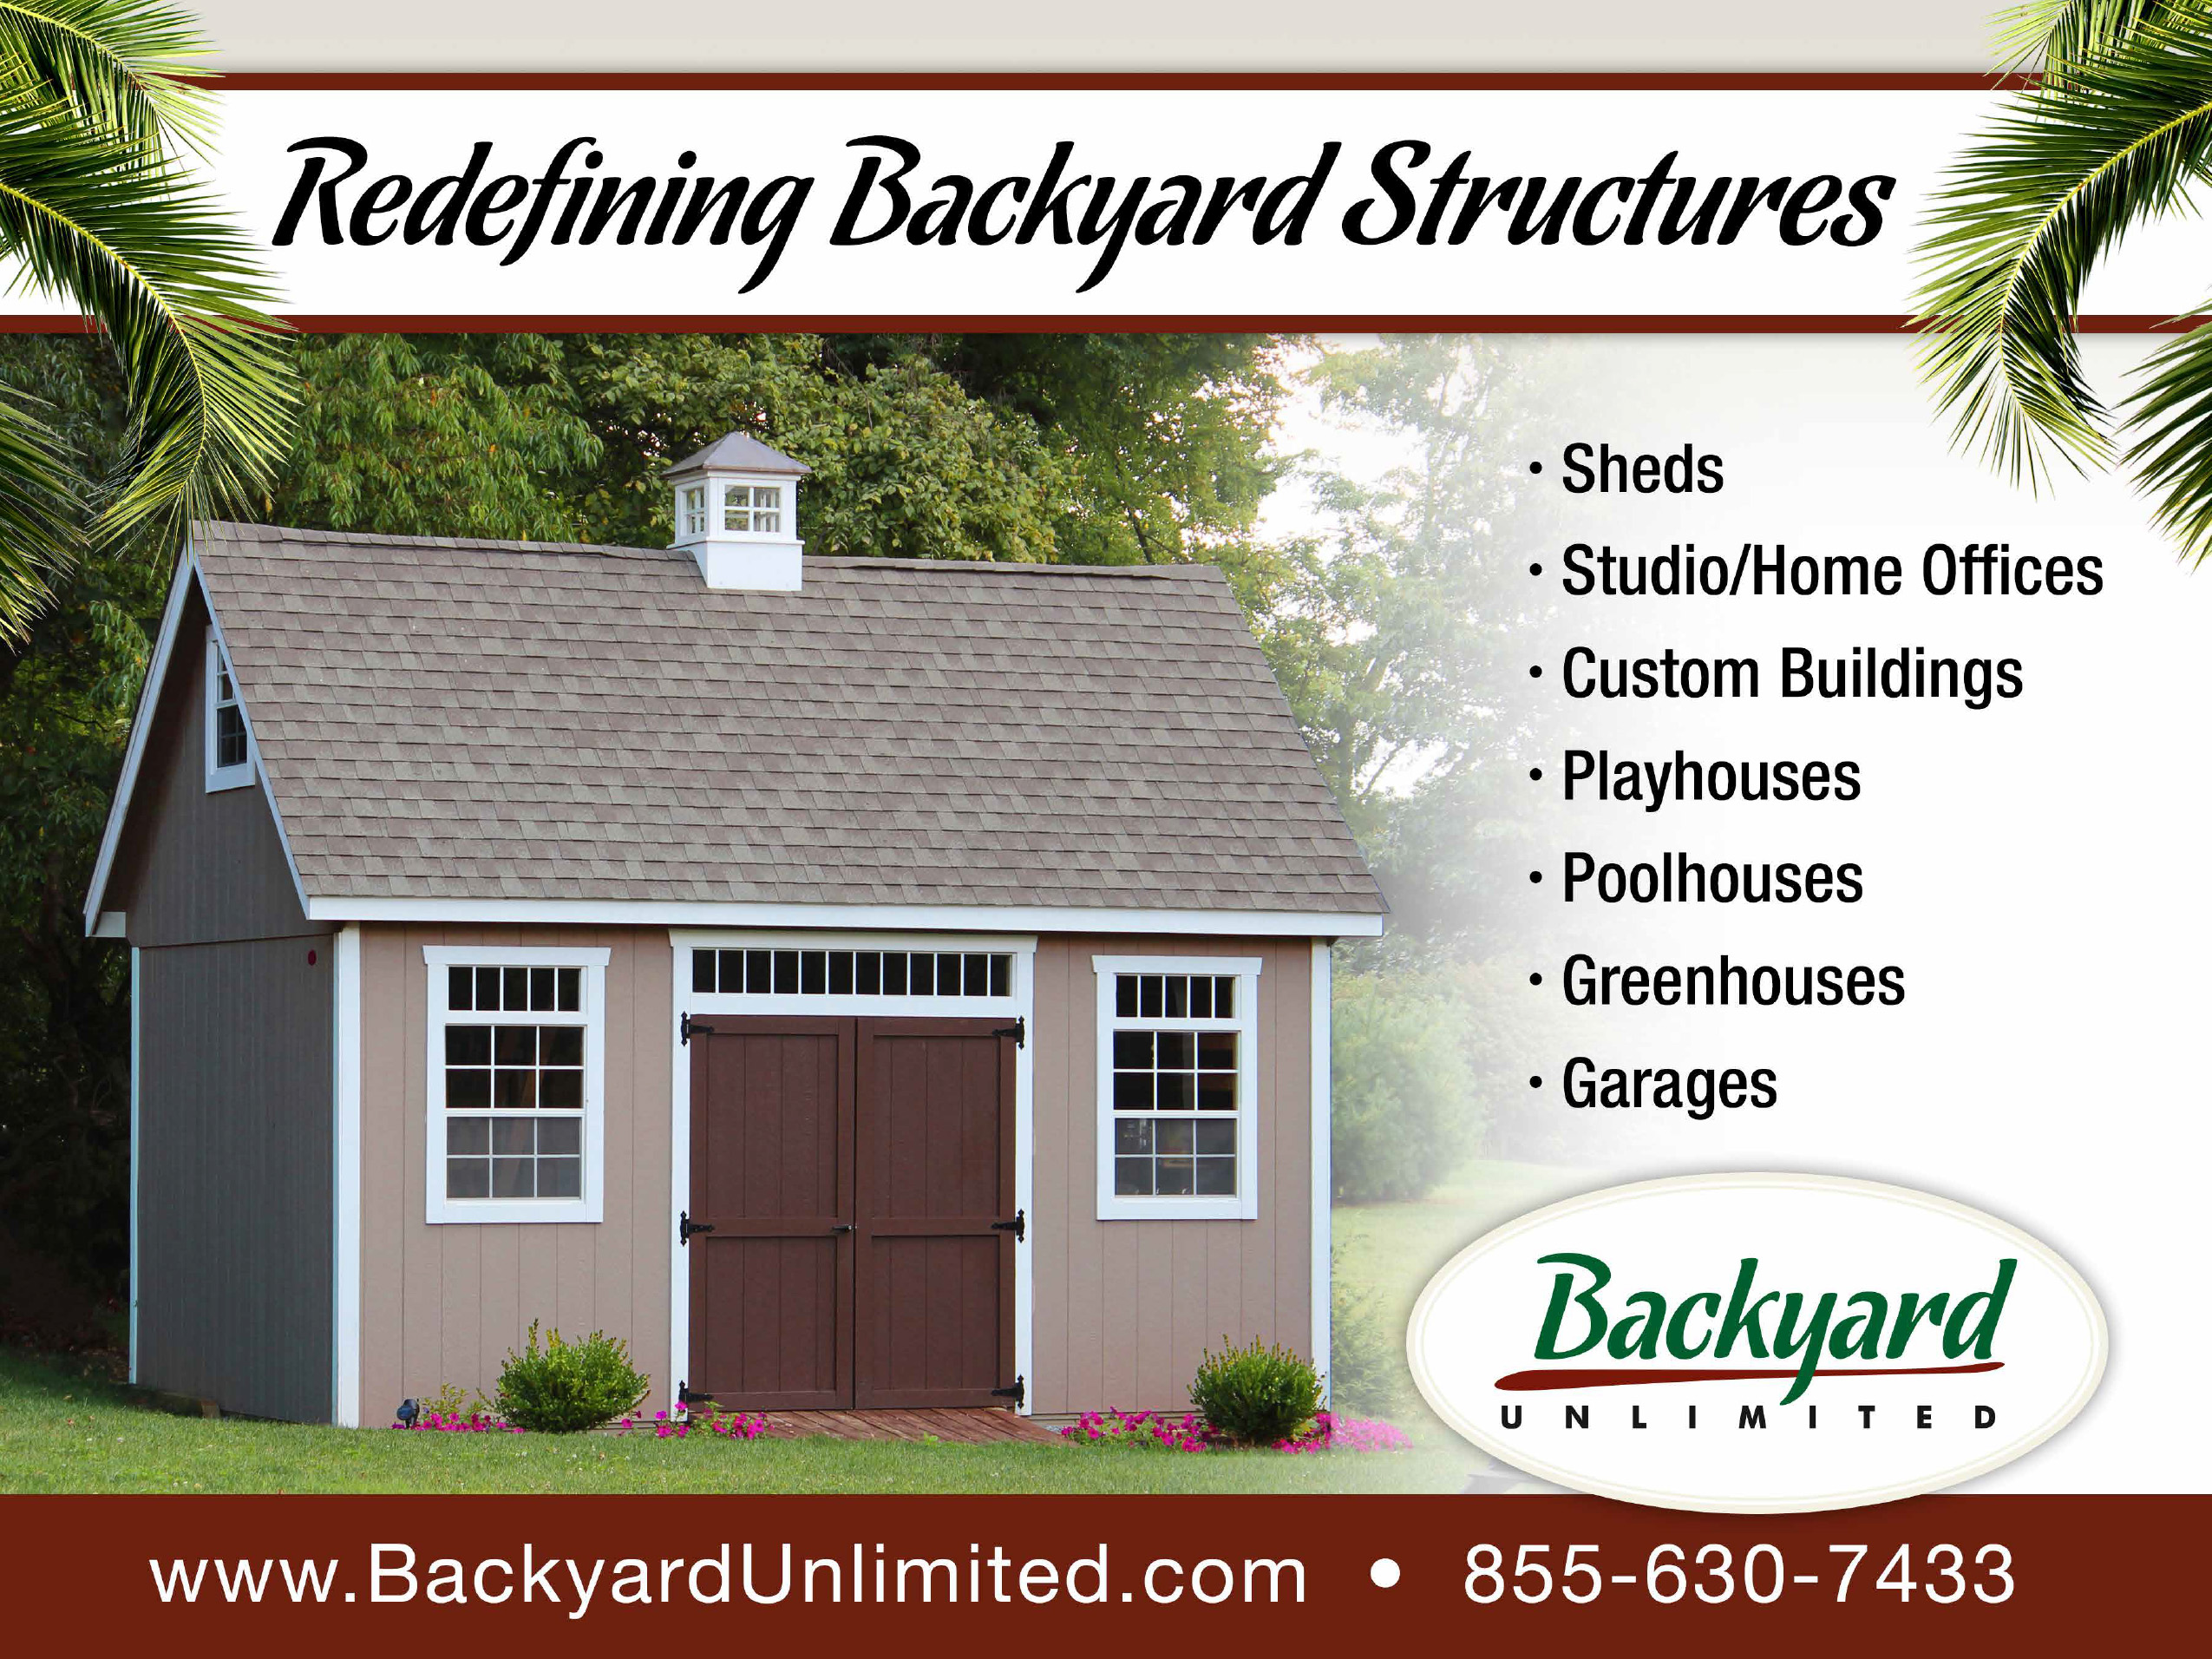 backyard-and-beyond-billboard-design-by-business-design-service